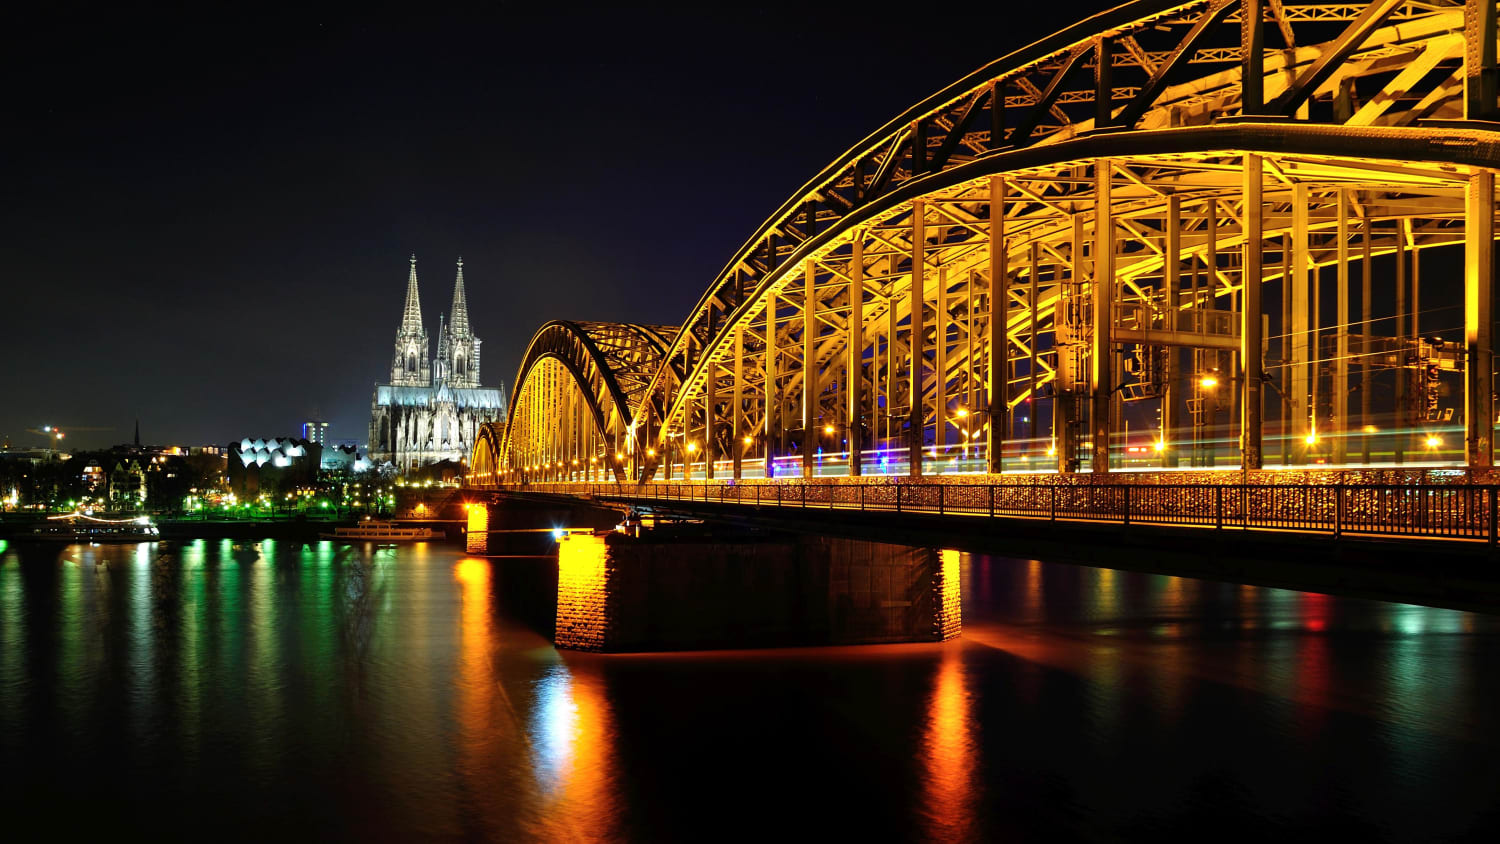 Cologne, Germany at night